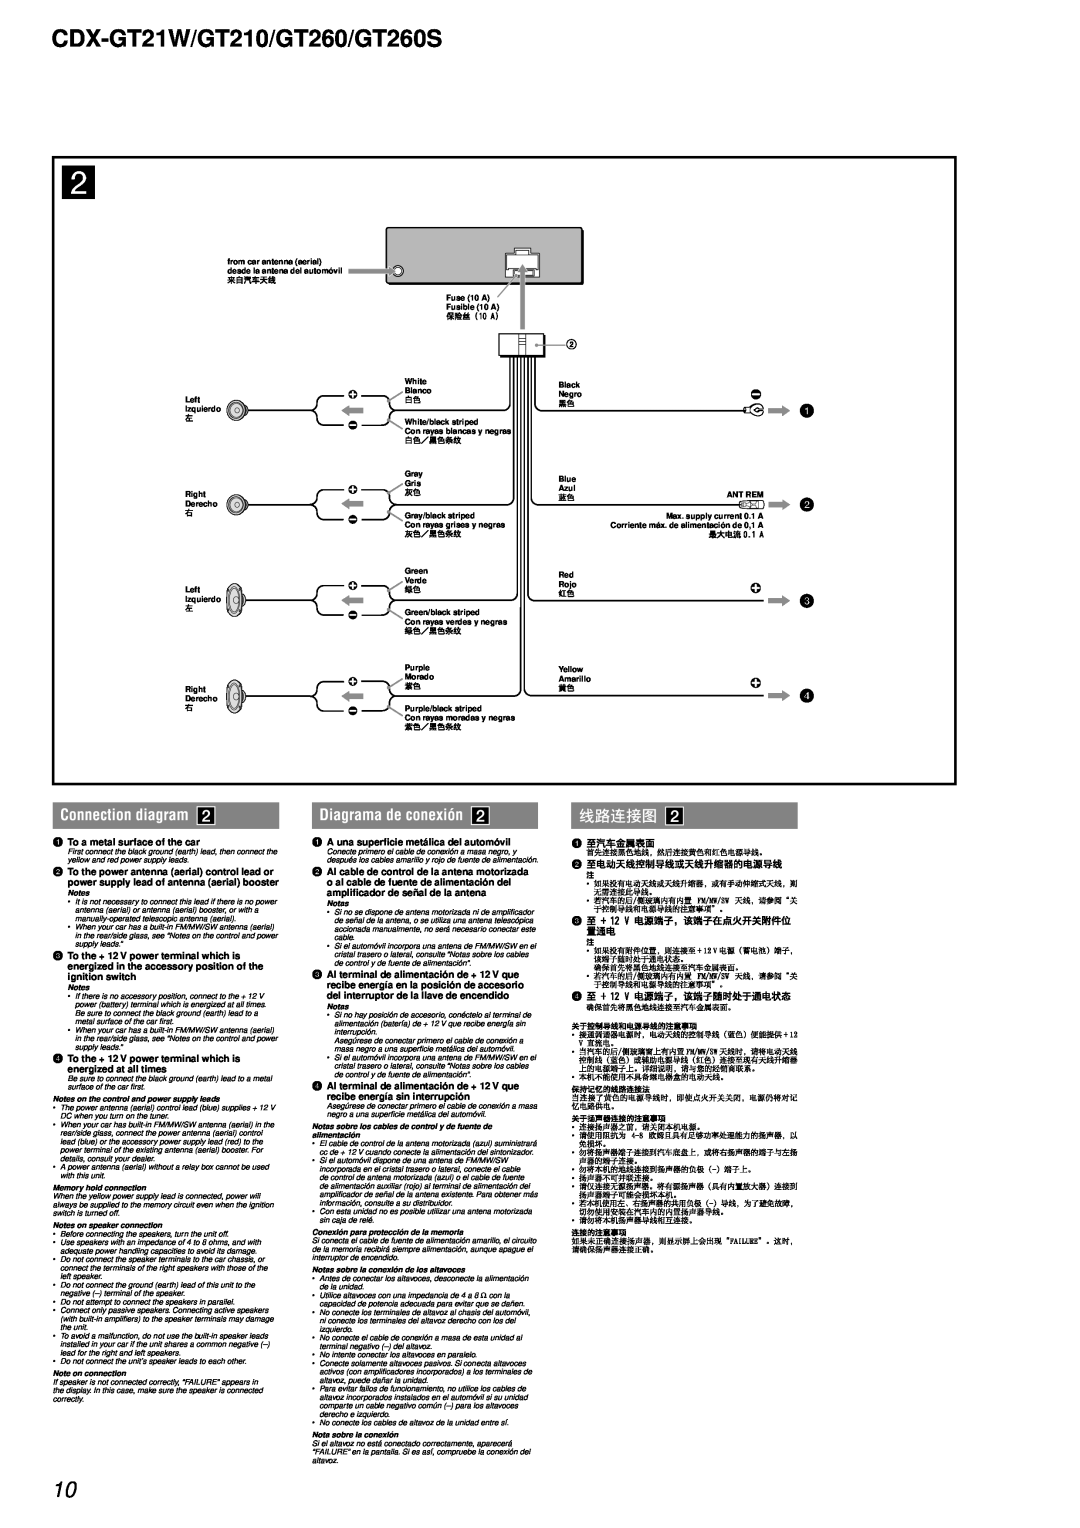 Sony CDX-GT210, CDX-GT260S service manual CDX-GT21W/GT210/GT260/GT260S, Connection diagram, Diagrama de conexión 